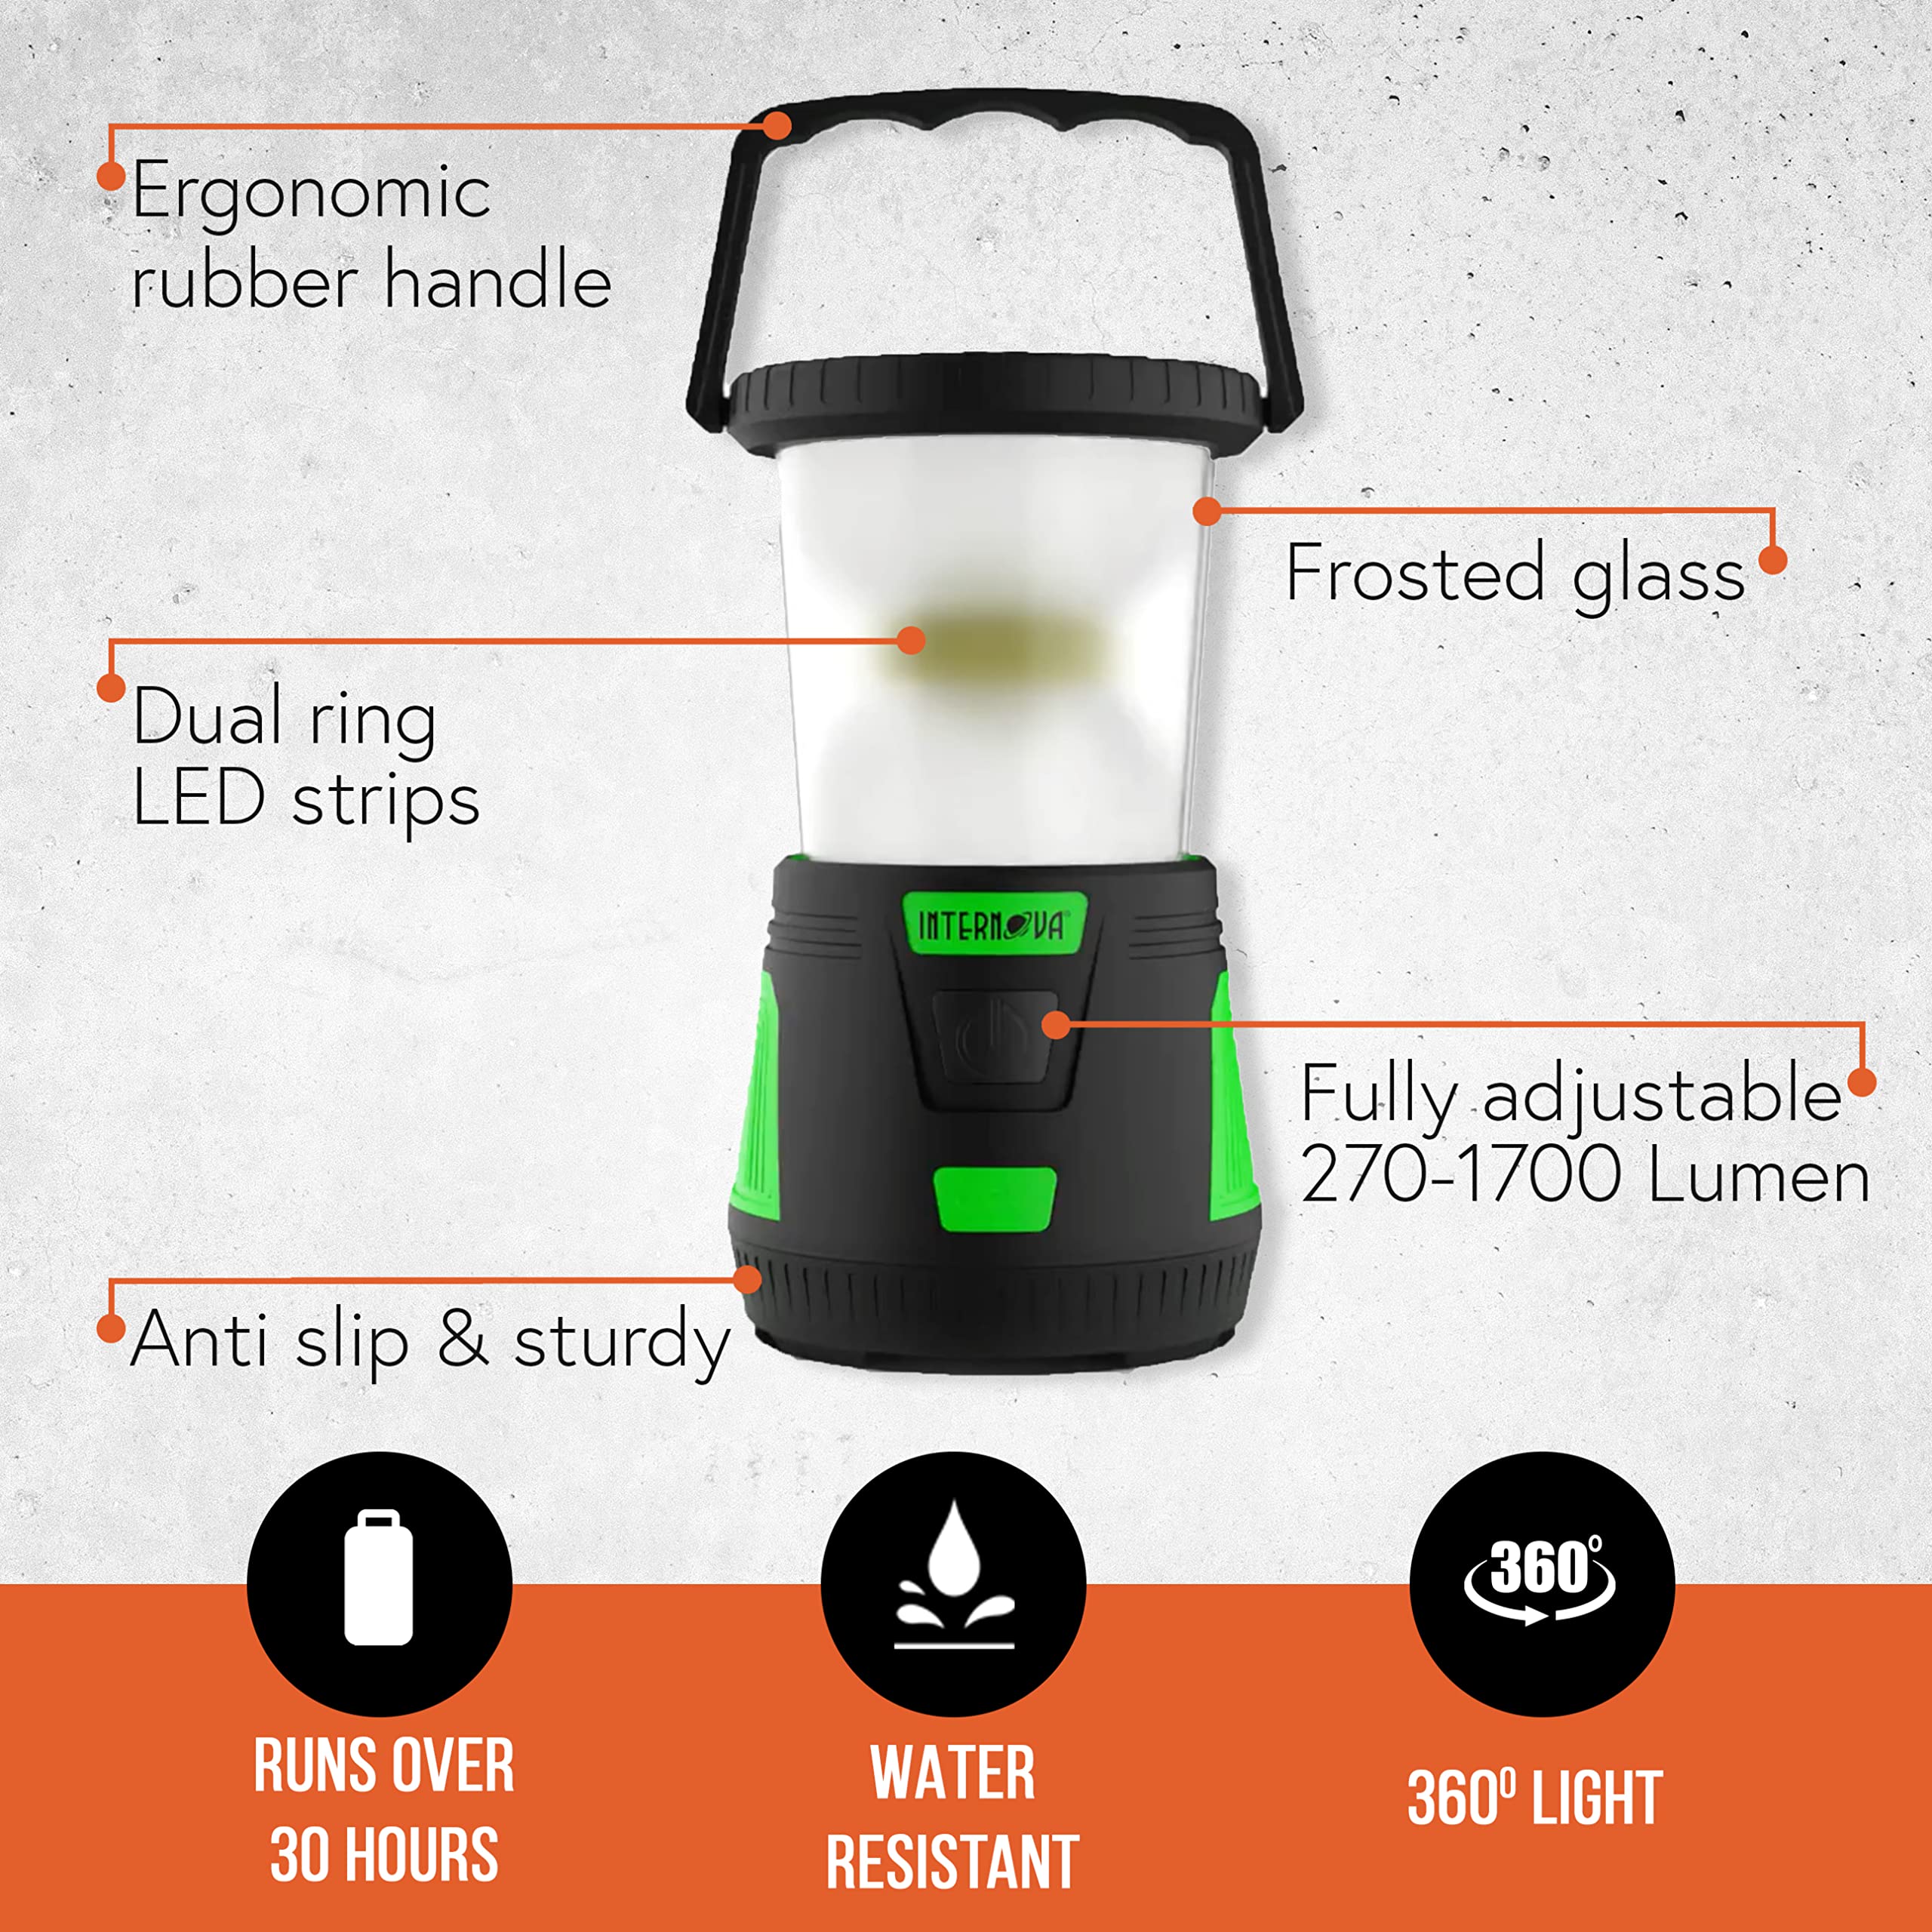 Internova ® 2000 Lumen LED Camping Lantern, Longest Lasting Battery Lantern, Powered & Operated with Infinite 360 Degree Light C